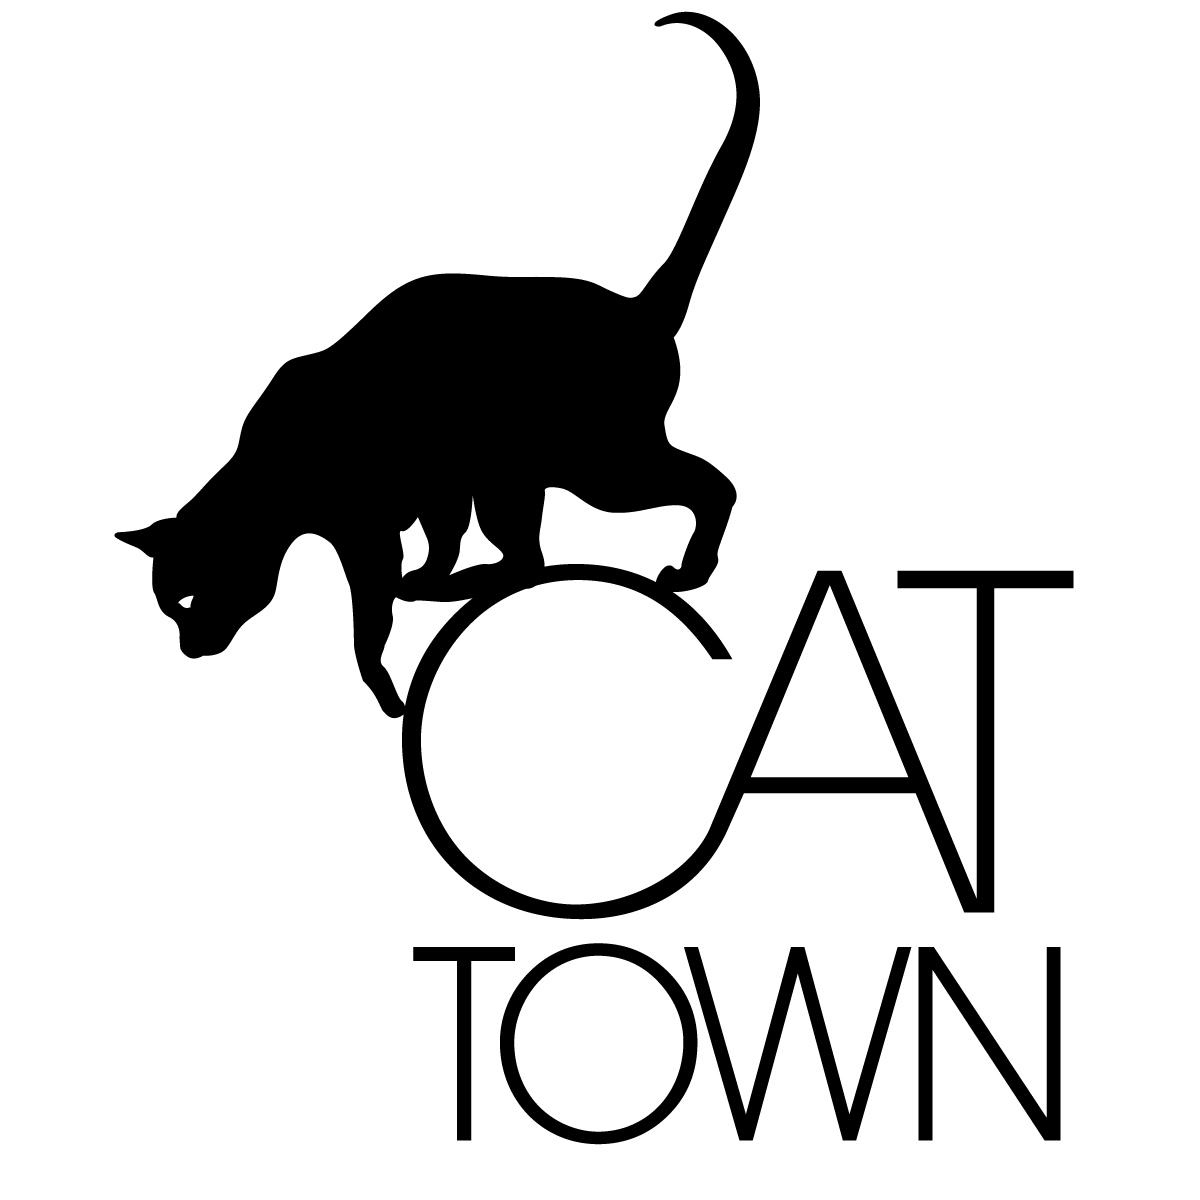 Cat Town | Petfinder.